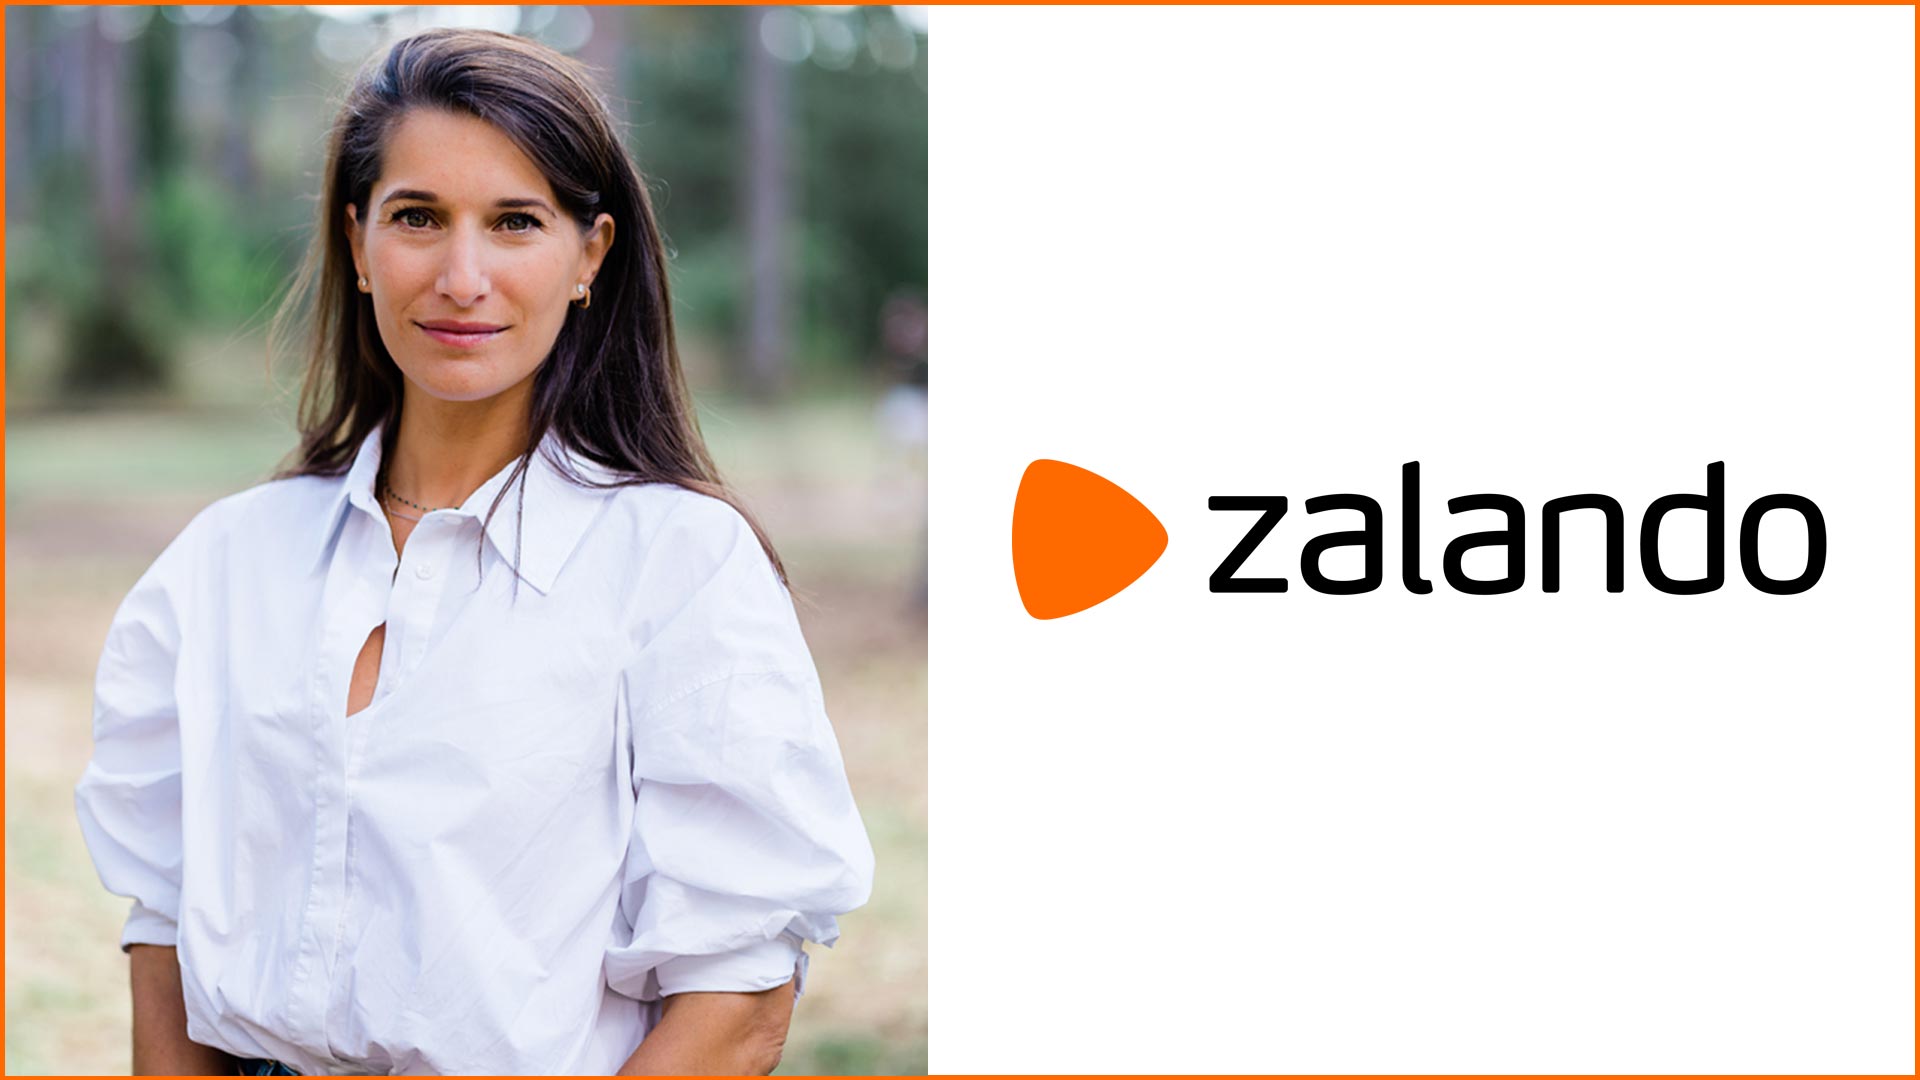 Zalando to build an innovative e-commerce platform in Paris Region